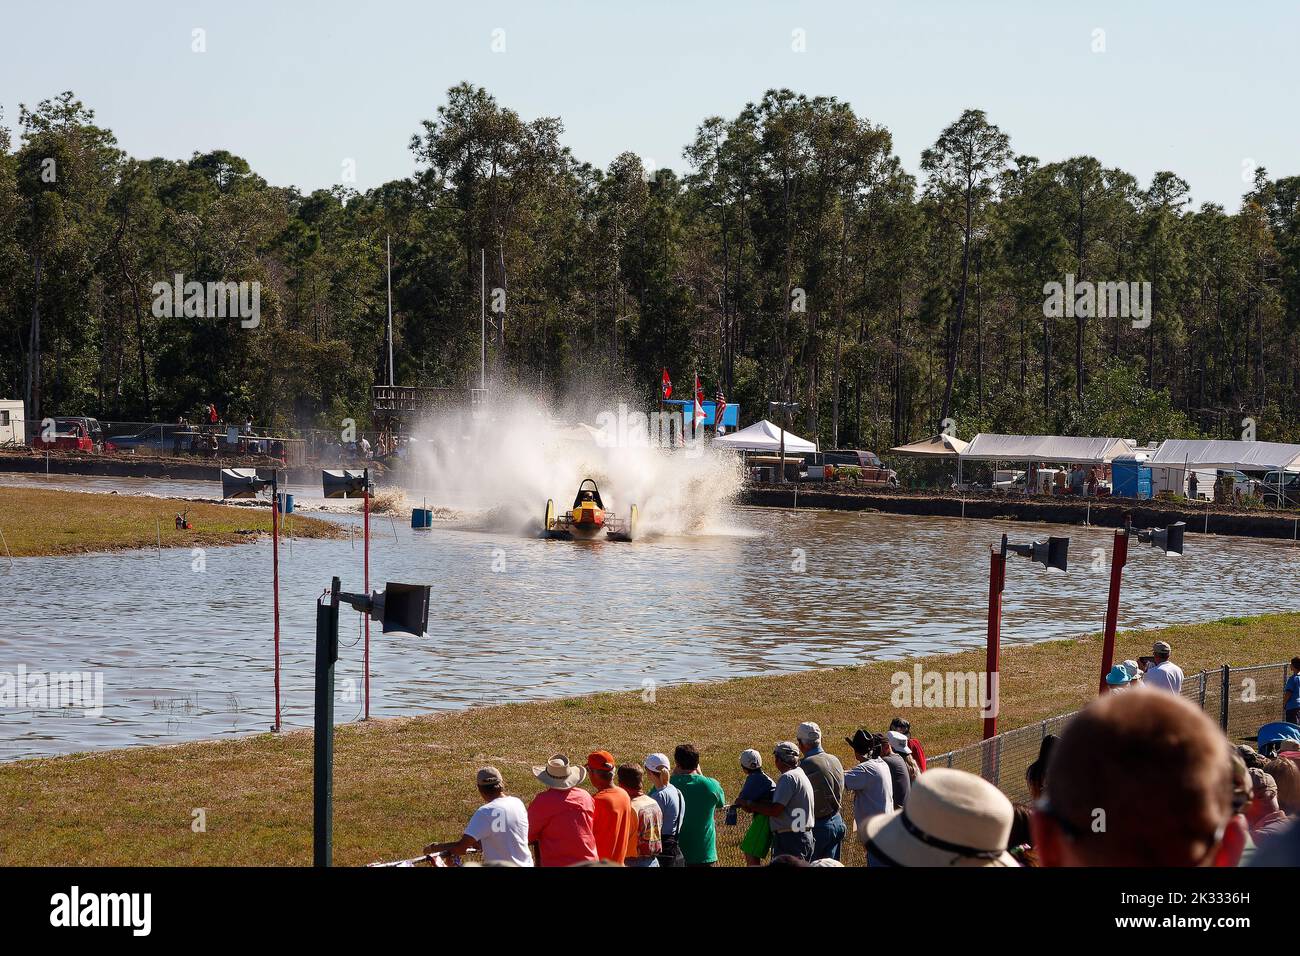 swamp buggy racing, large water spray, action, spectators, contest, motion, sport, scene, Florida Sports Park, Naples, FL Stock Photo